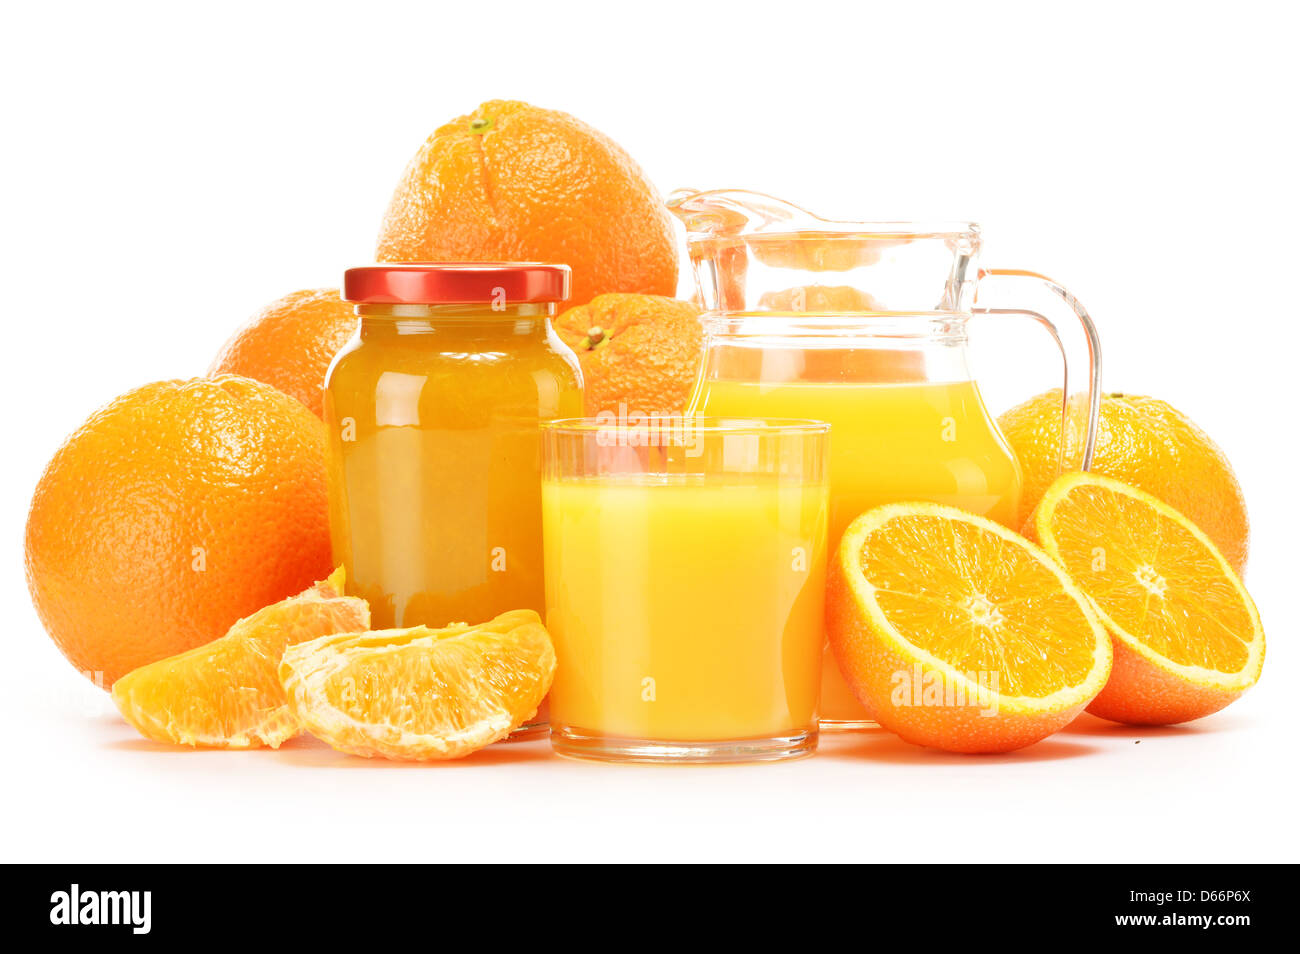 Glass and jug of orange juice, jar of jam and fruits. Variety of orange products Stock Photo